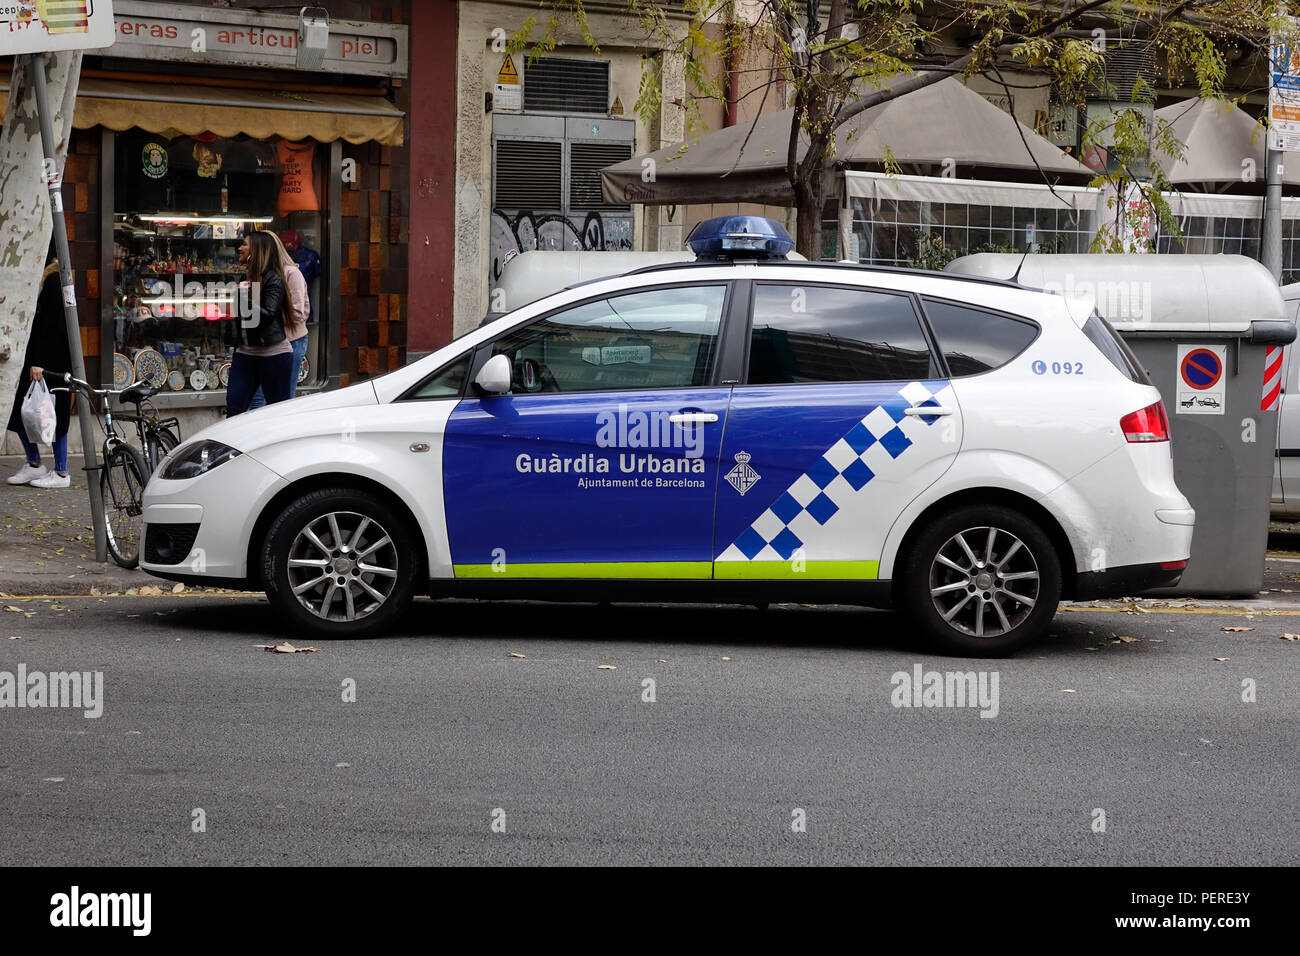 A Police Car Of The Guardia Urbana de Barcelona A Municipal Police Force In Barcelona Spain Stock Photo